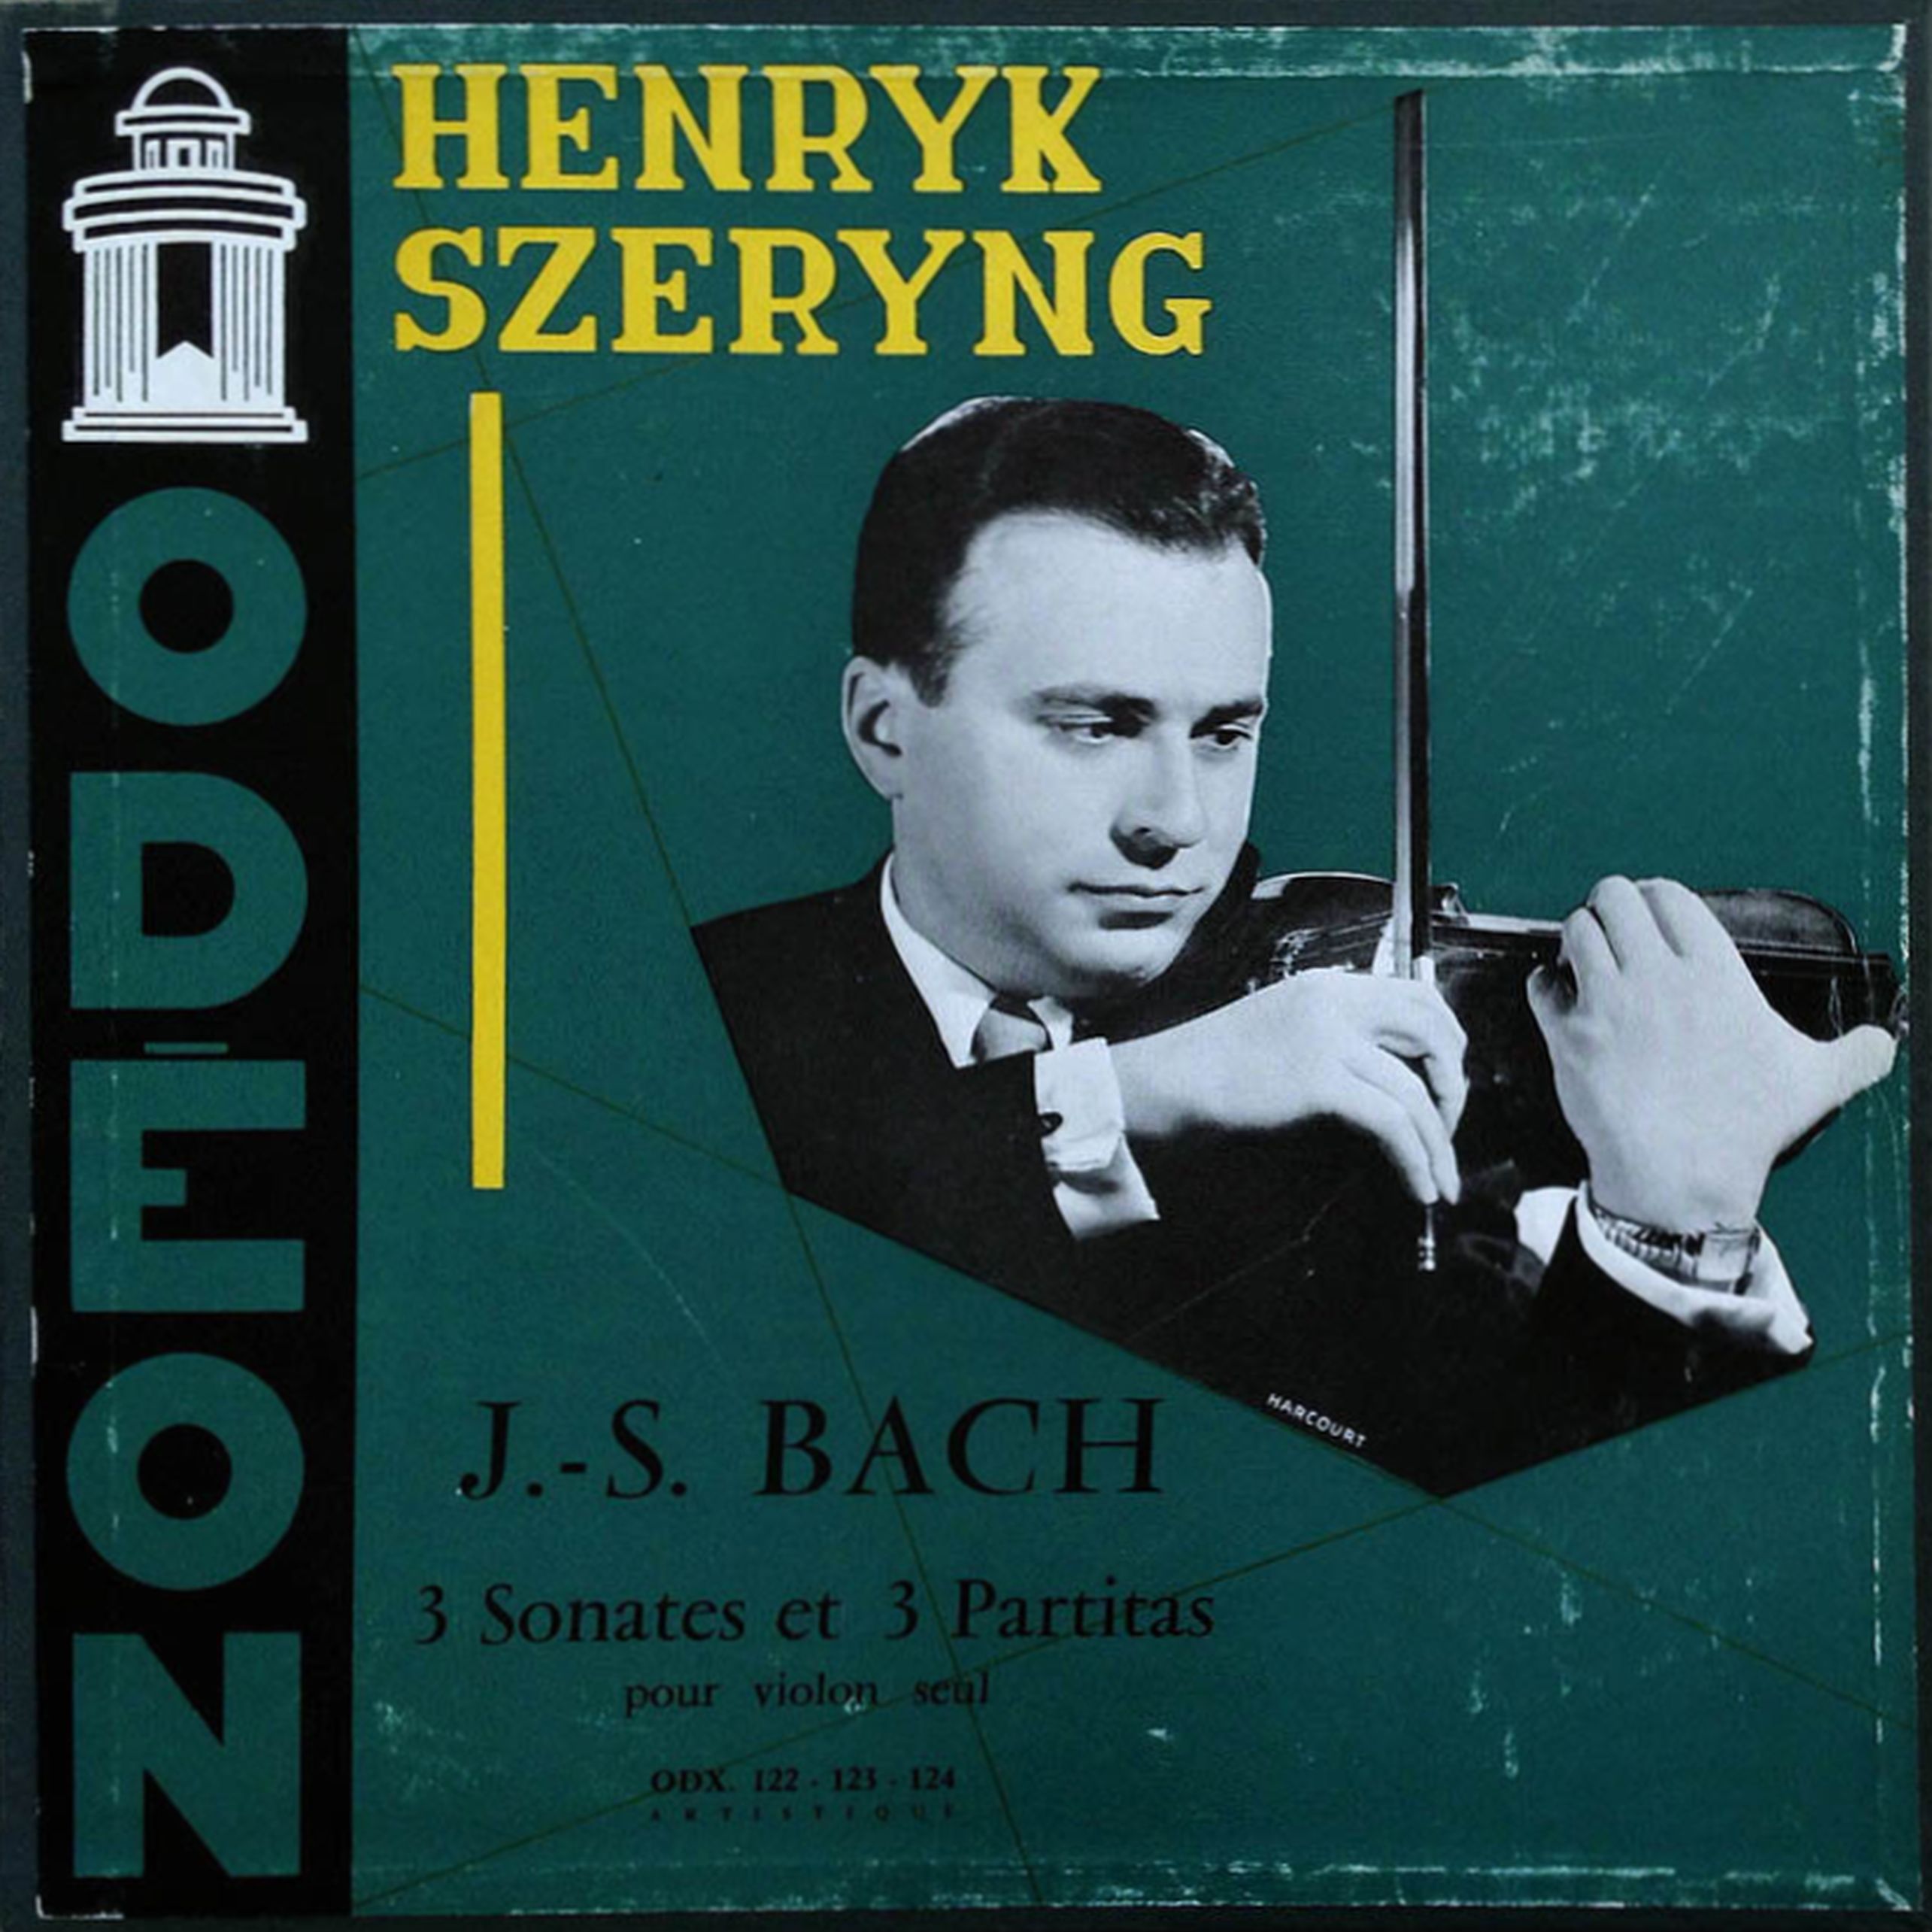 Szeryng Henryk Bach Sonatas Partitas Odeon ODX 122 4